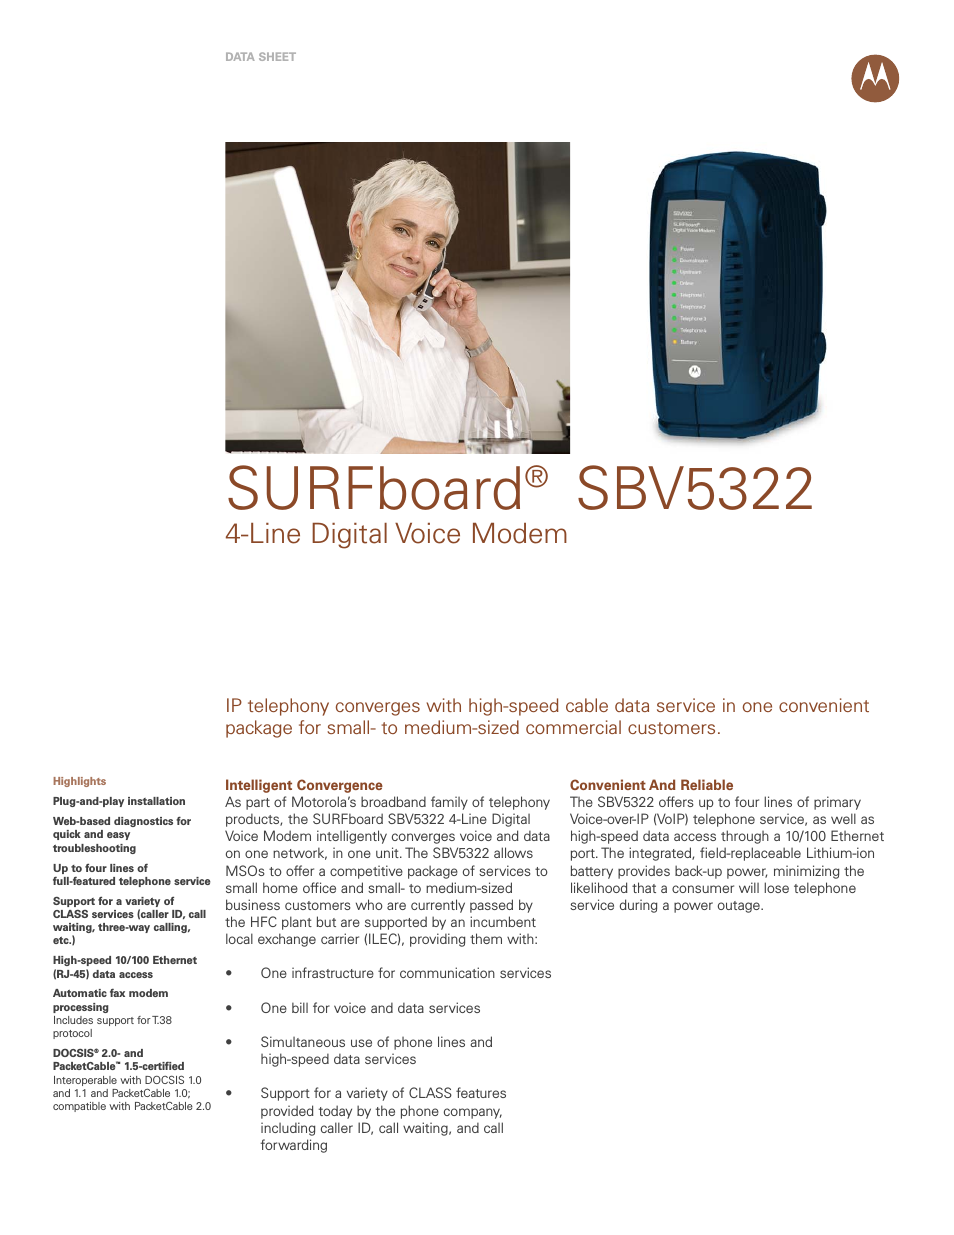 SURFboard SBV5322